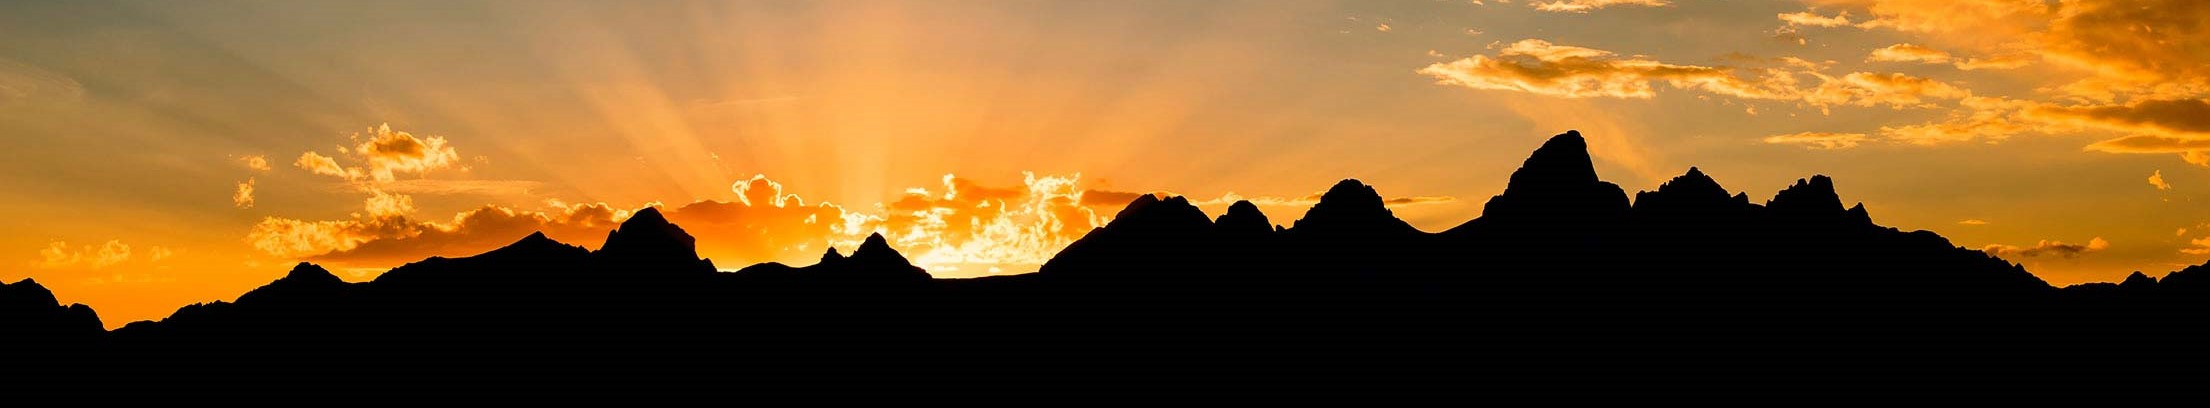 Teton Mountain Sunset Image